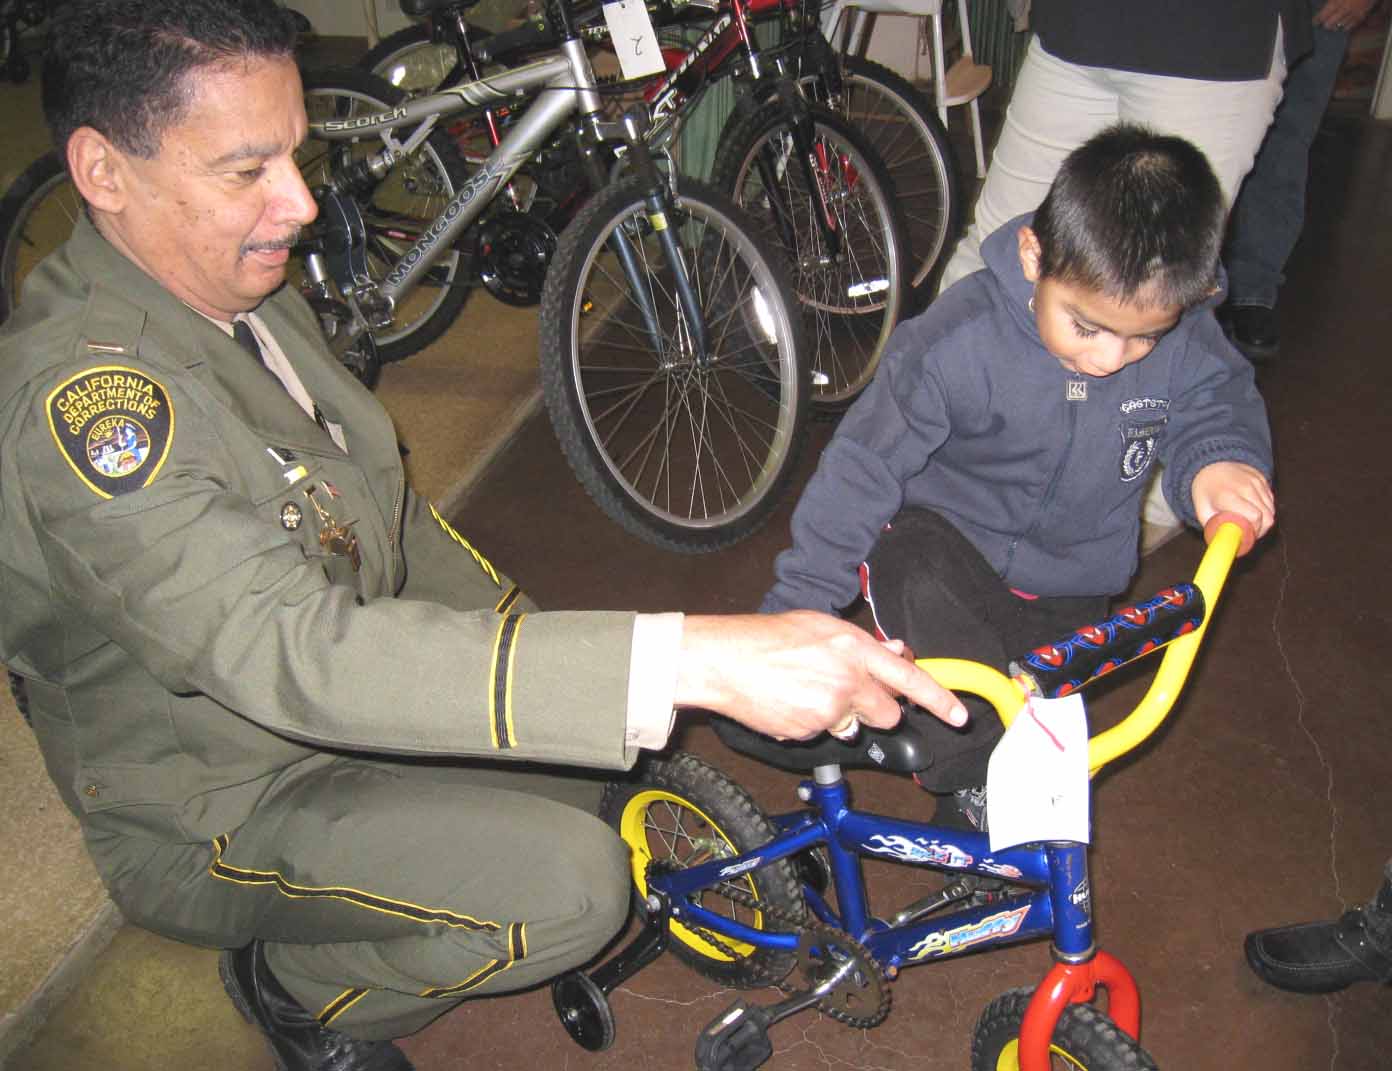 SATF+Lieutenant+assists+a+child+with+a+bike.jpg